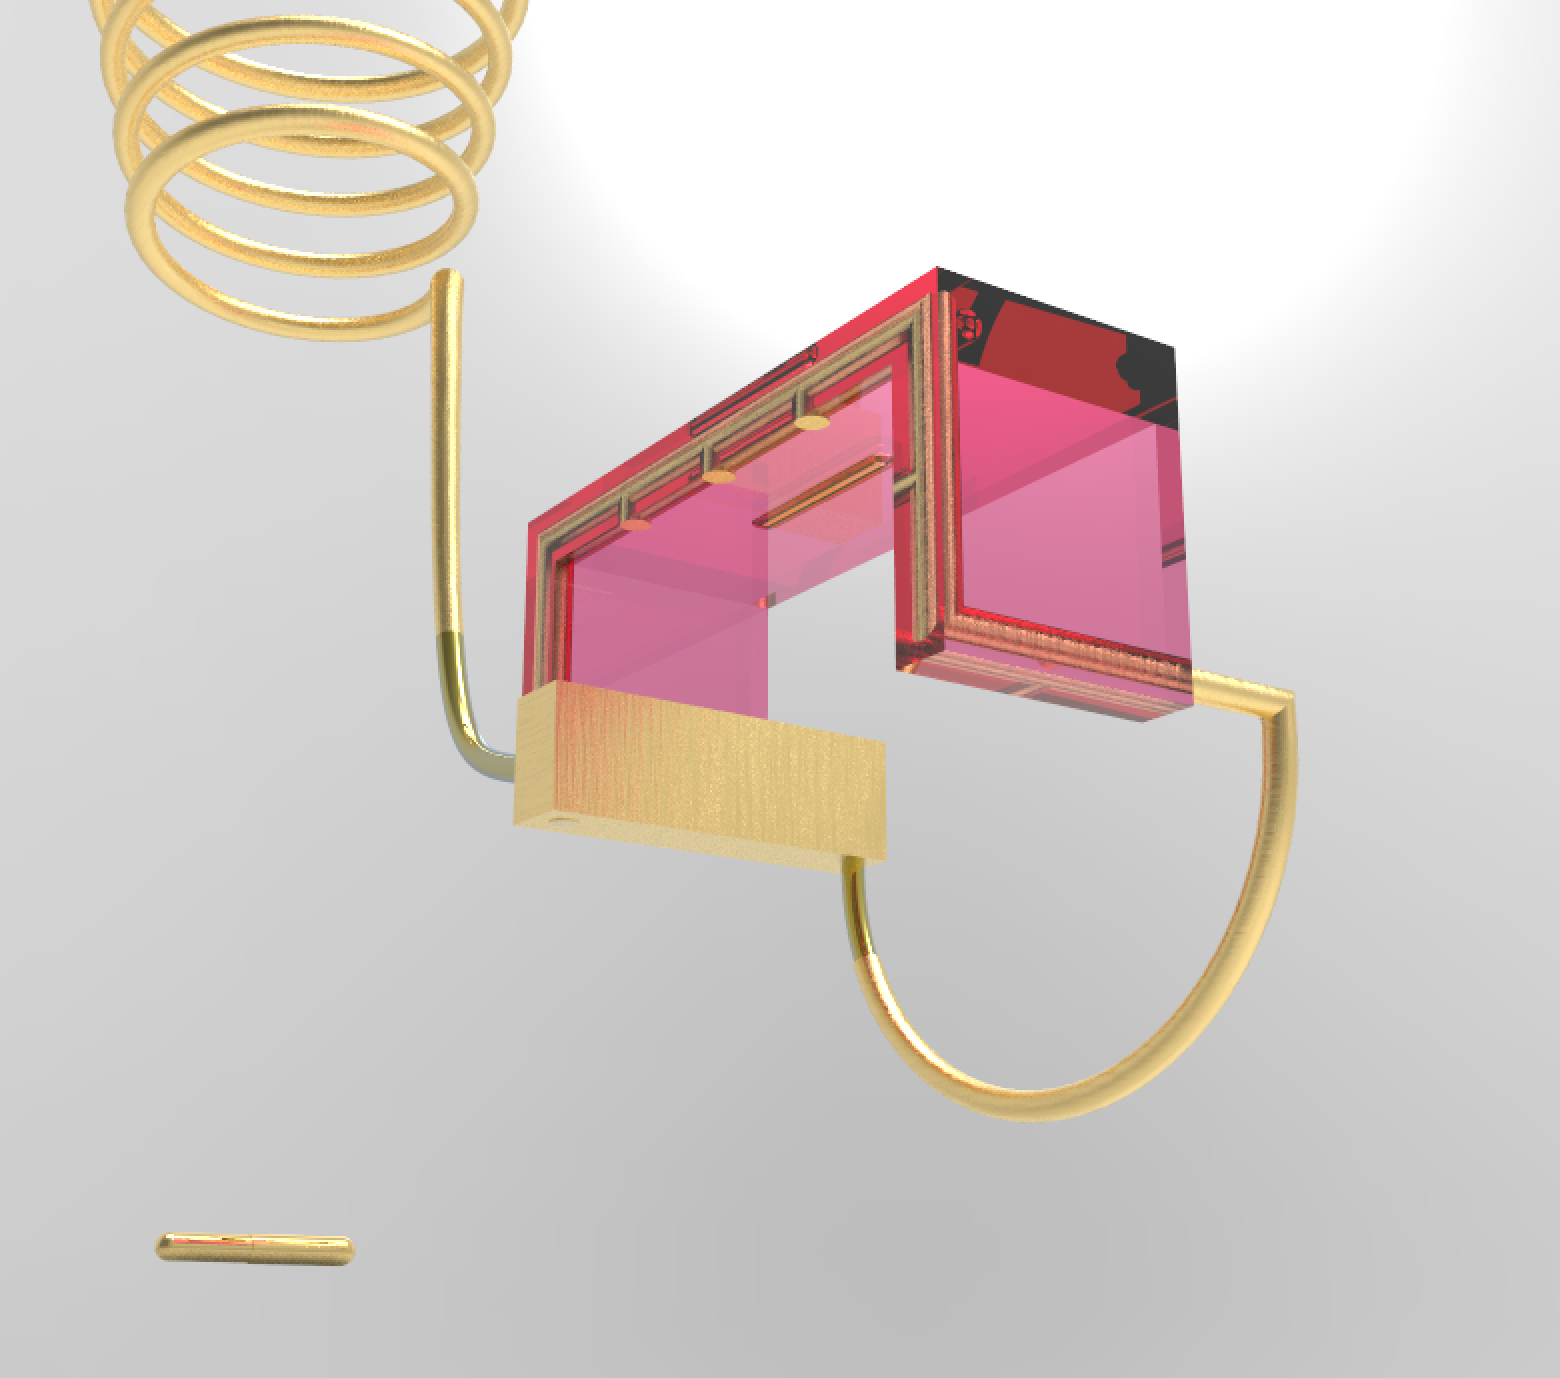 Bracelet sketch for Pink Slime Caesar Shift, image: Miranda Jin. Additional design support provided by Berna Onat and Tongxin Sun.